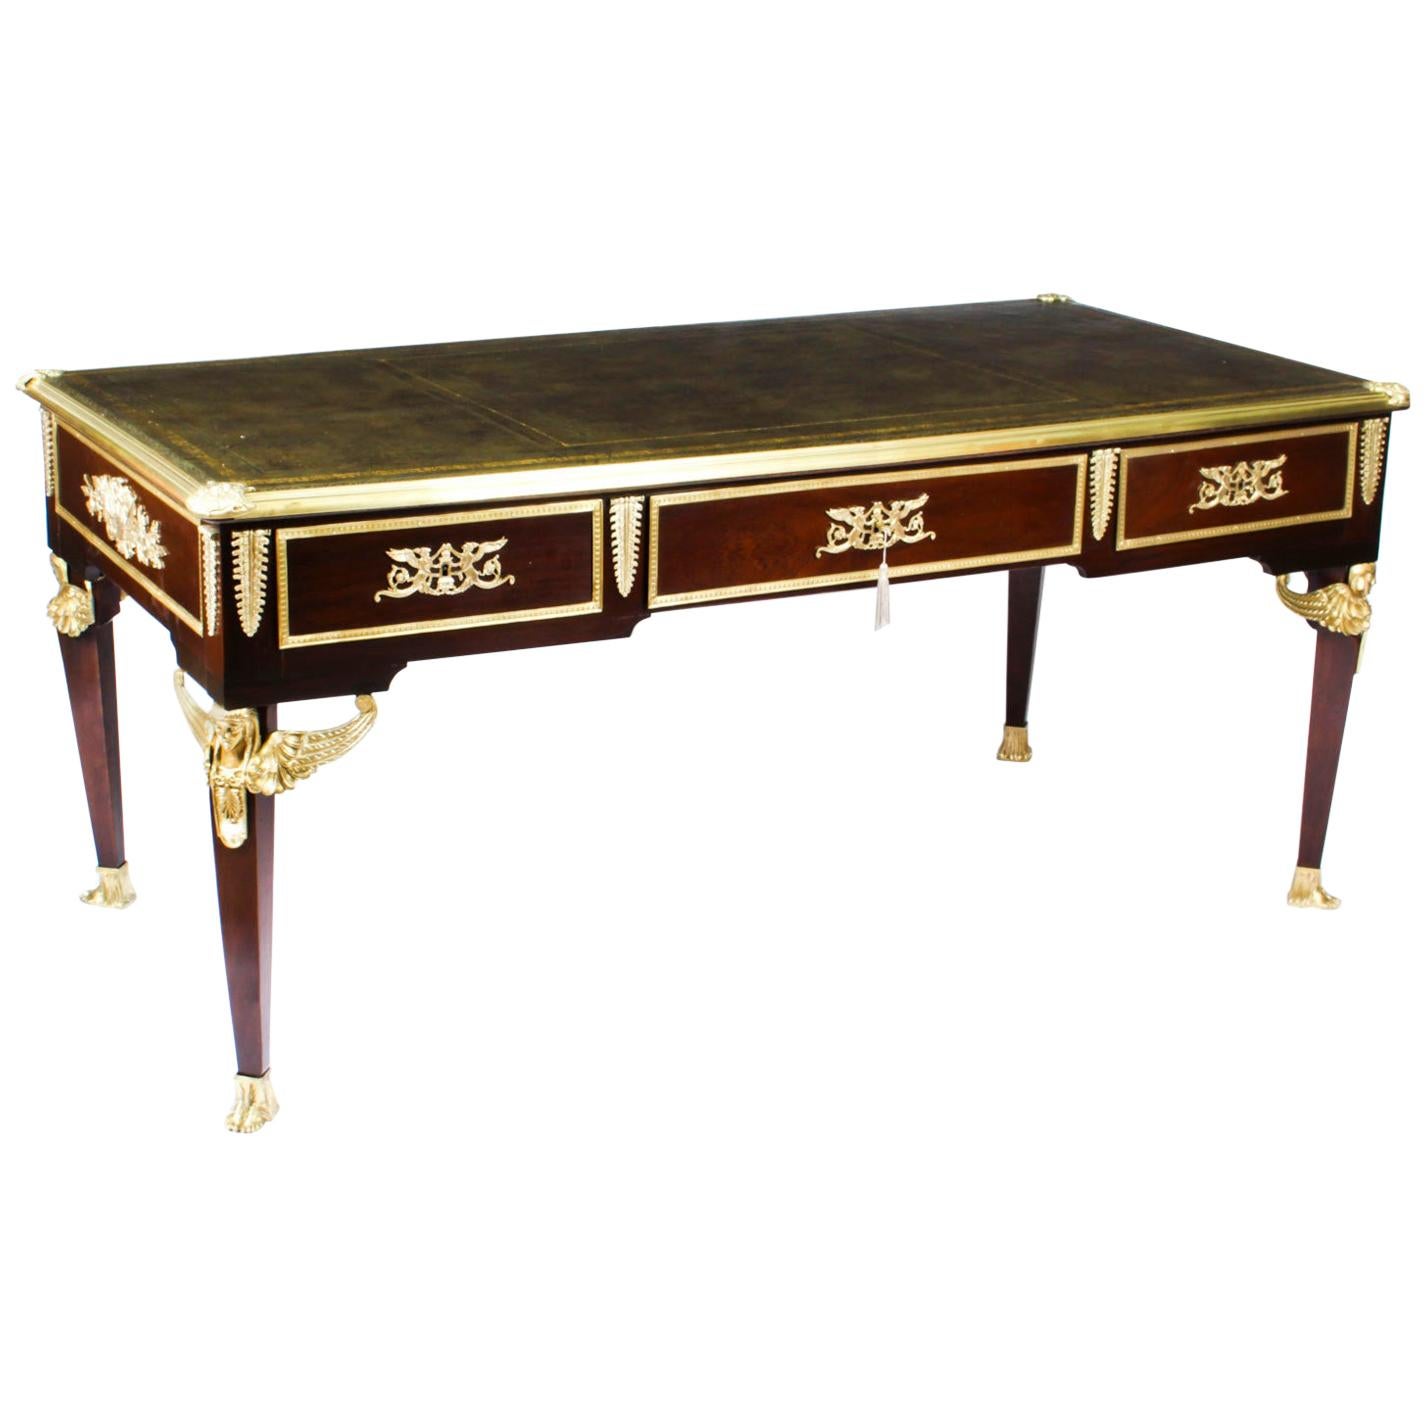 Antique Monumental French Empire Bureau Plat Desk Writing Table, 19th Century For Sale